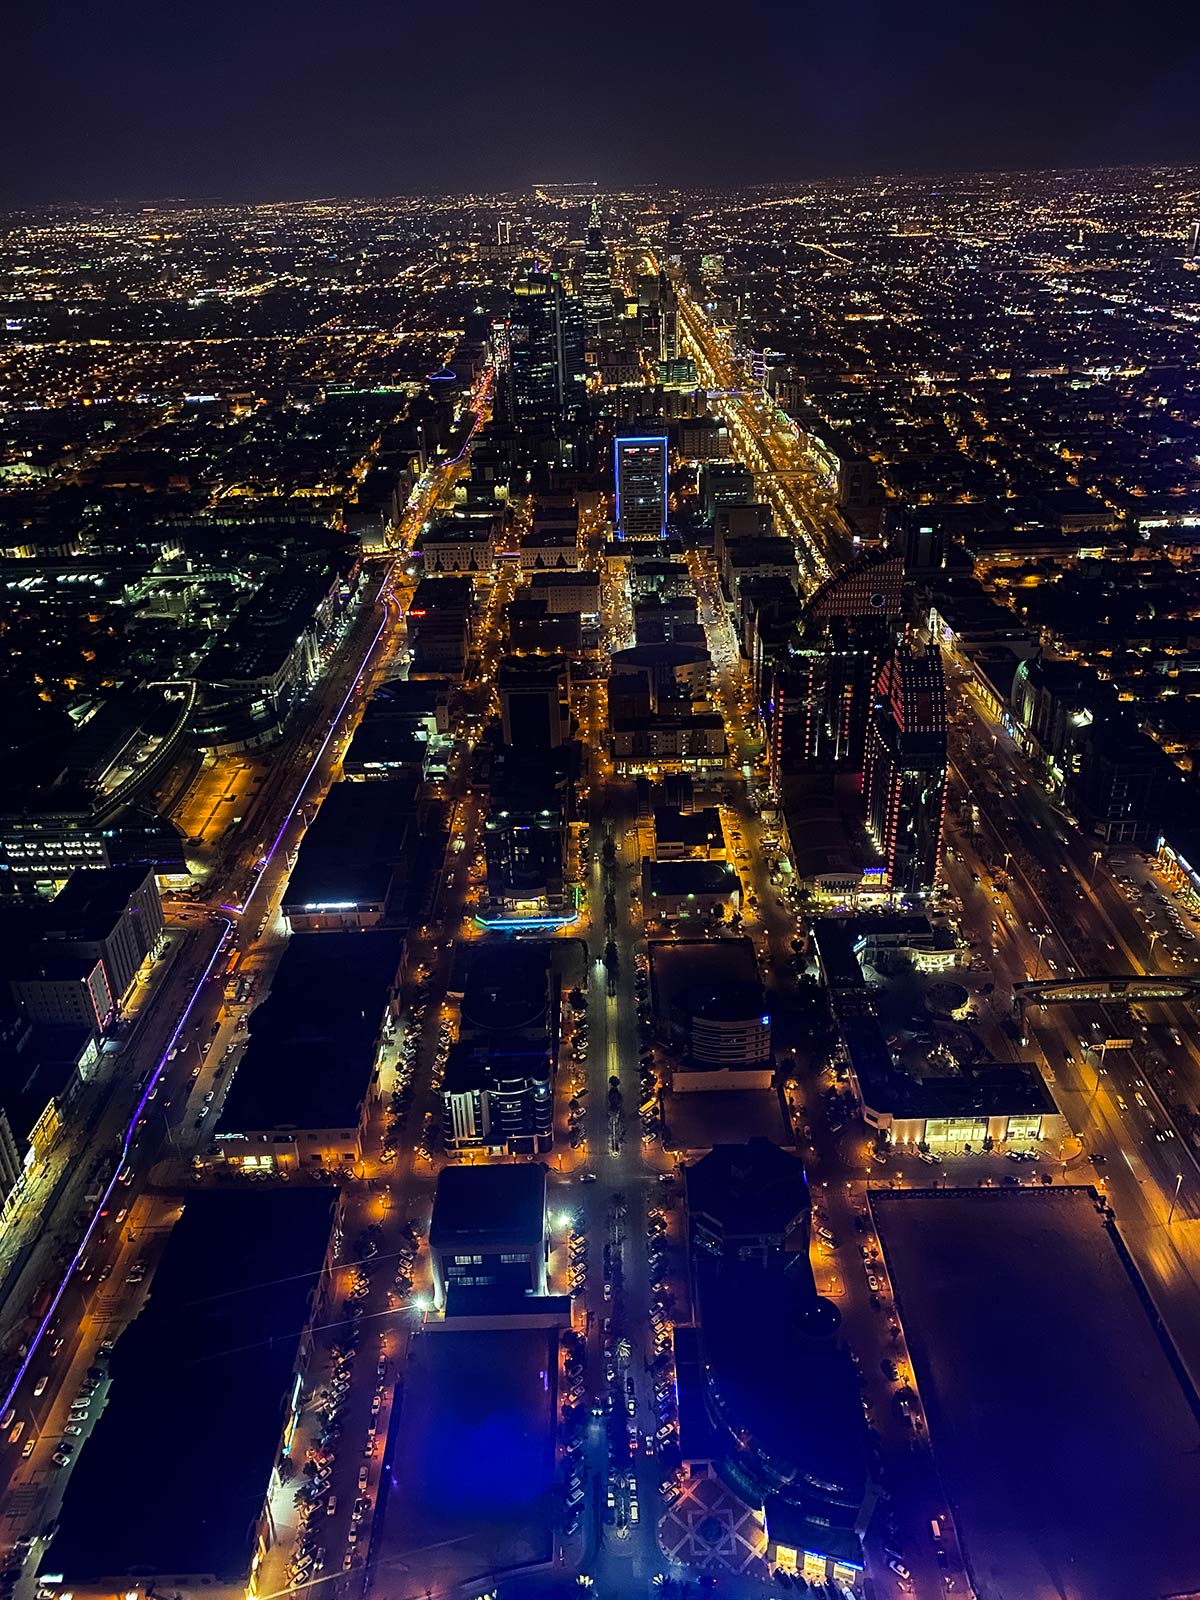 City at night in Jeddah, Saudi Arabia. 2020 - A silver lining